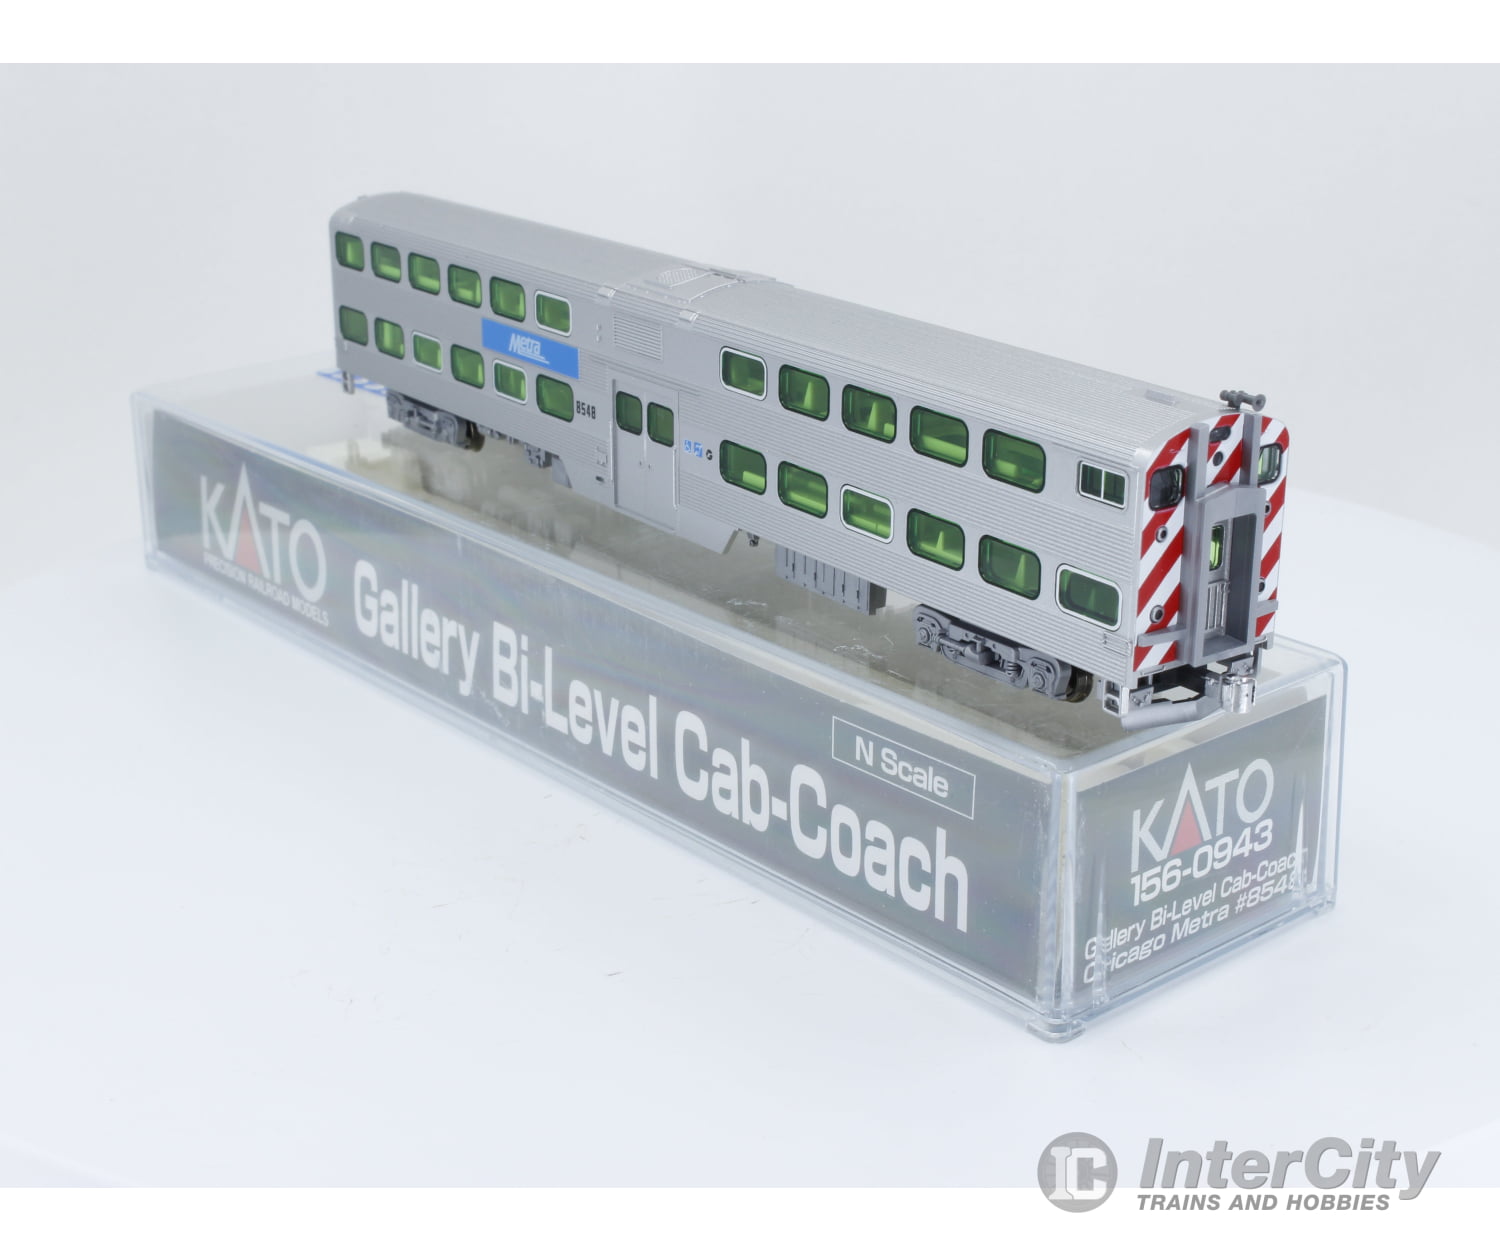 Kato 156-0943 N Gallery Bi-Level Cab-Coach Chicago Metra (Metx) 8548 (2) Passenger Cars